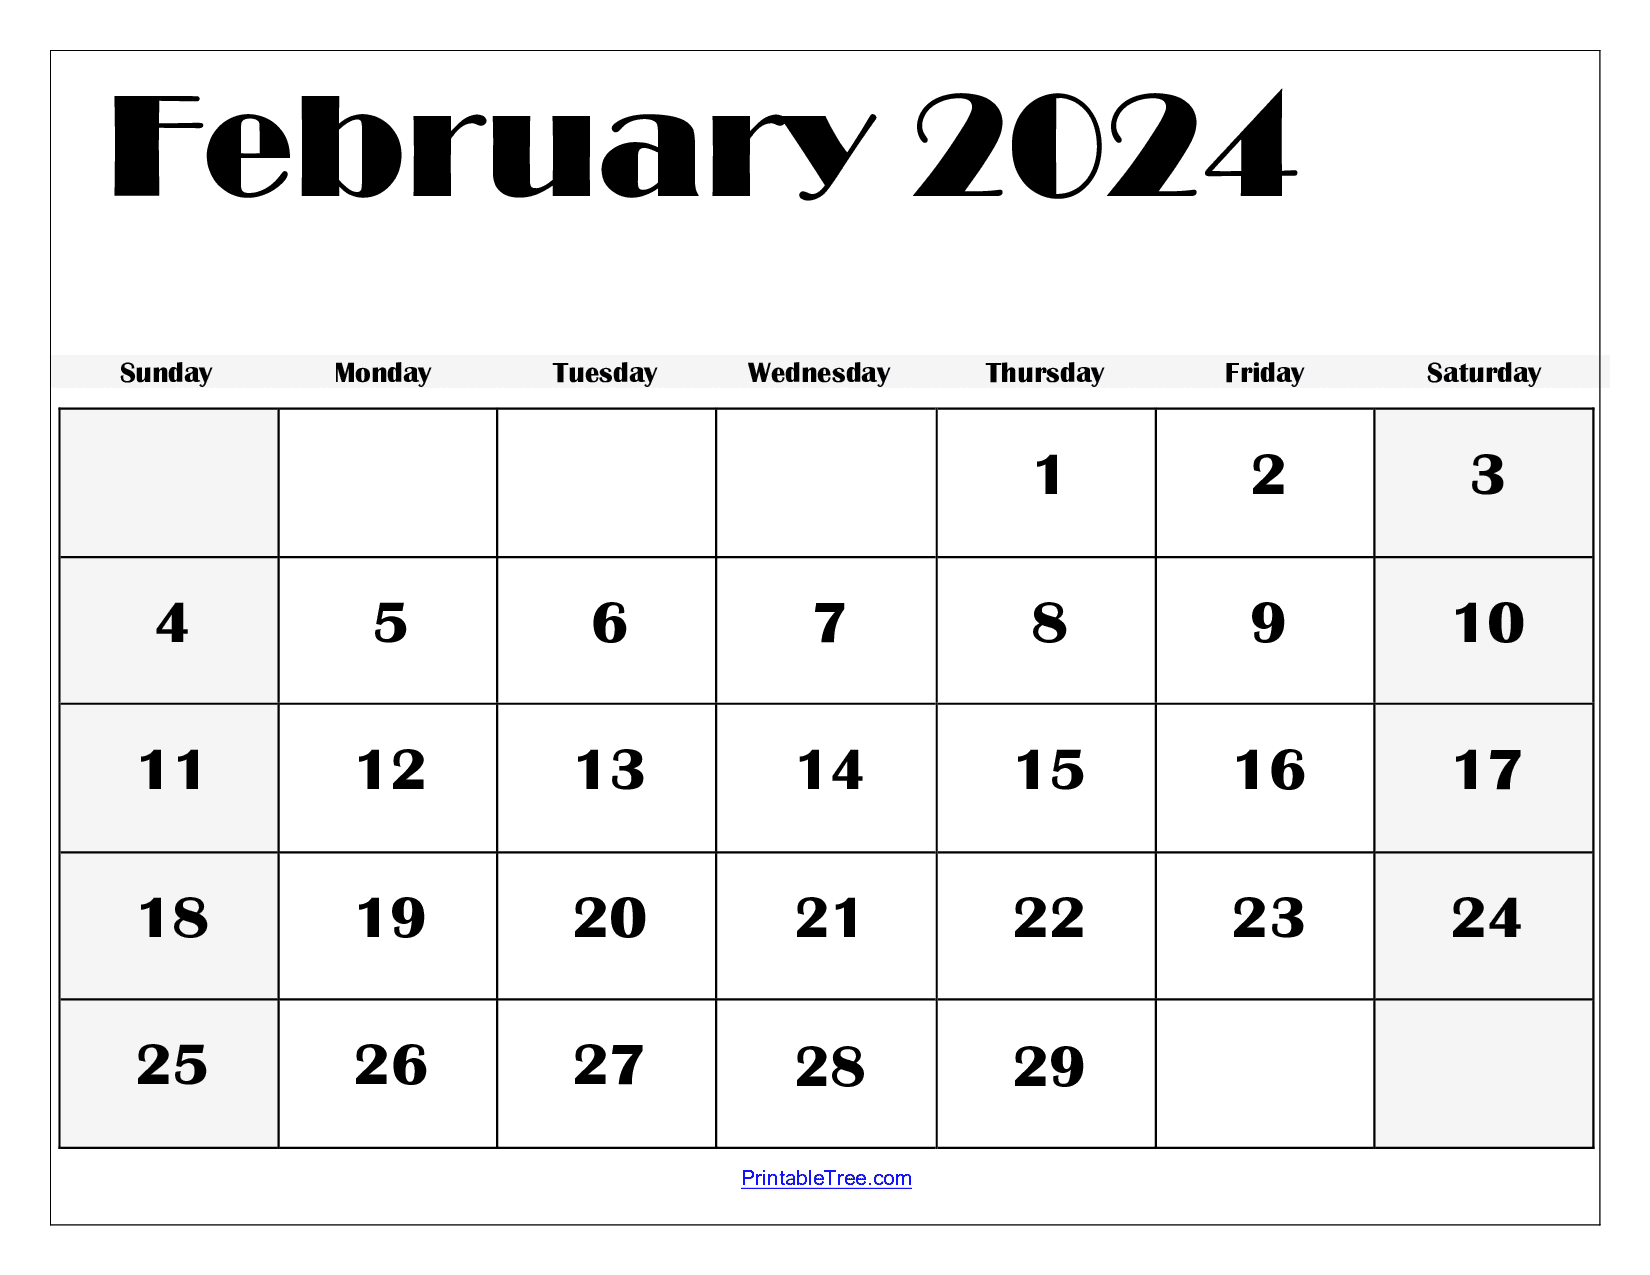 February 2024 Calendar Printable Pdf Template With Holidays for Free Printable February 2024 Calendar